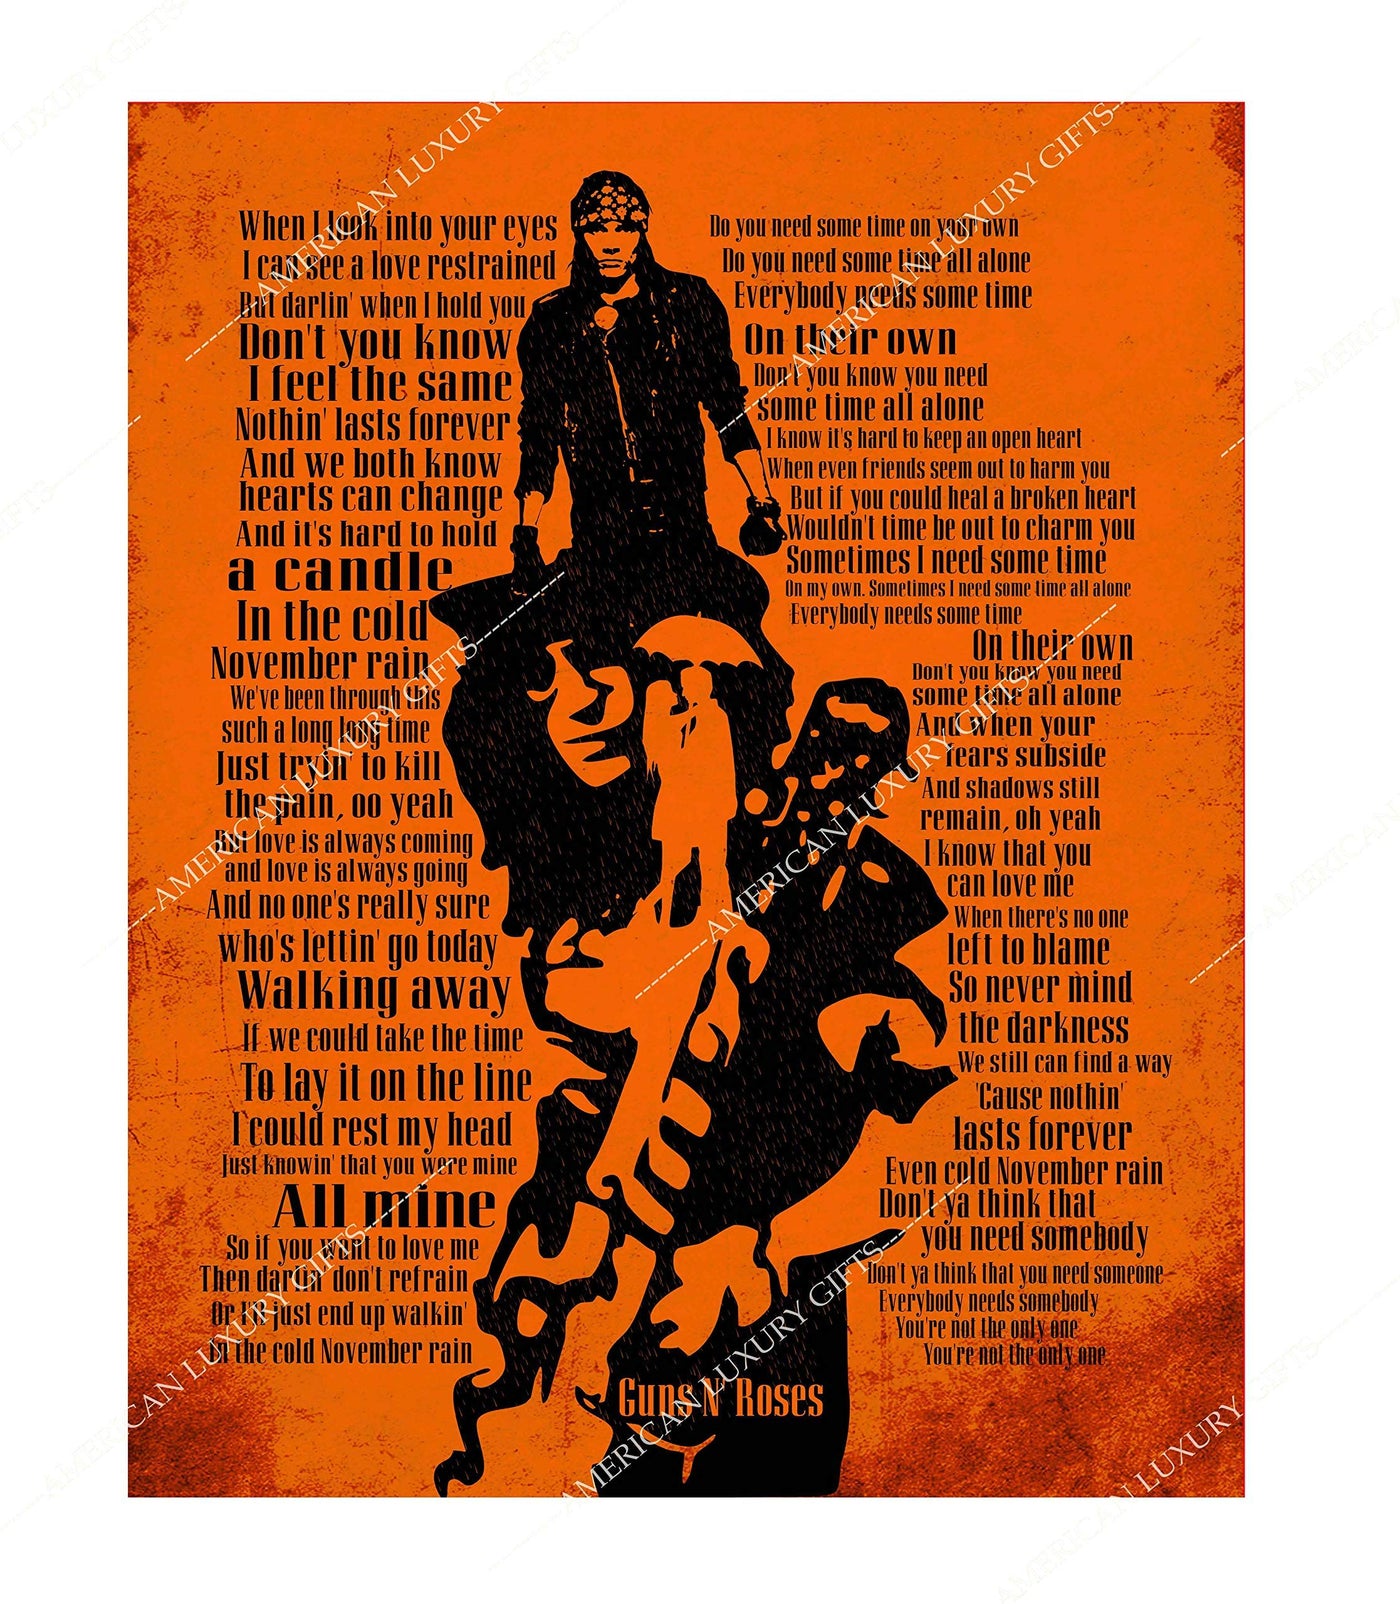 Guns n Roses Posters & Wall Art Prints